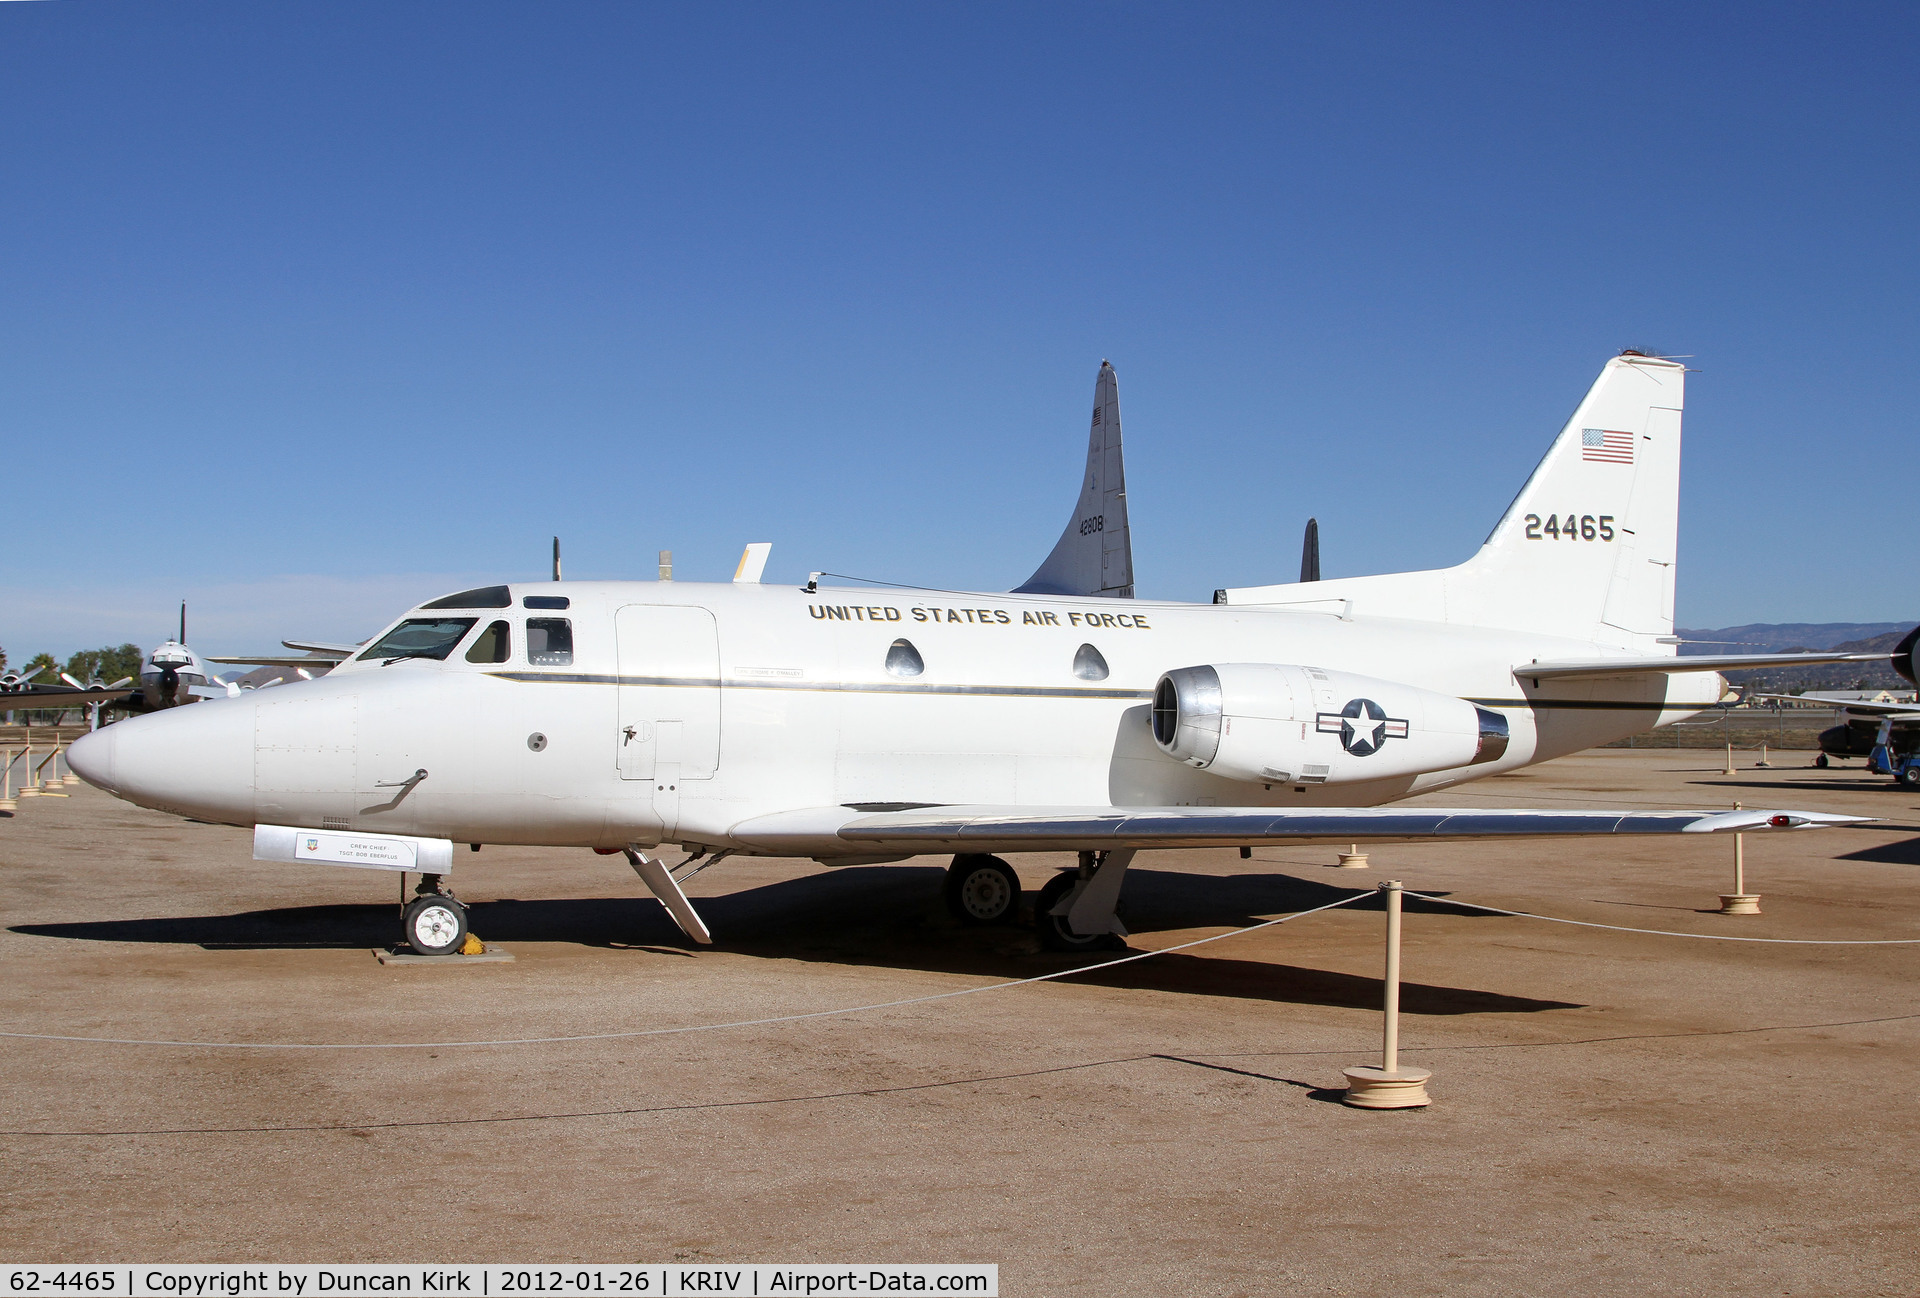 62-4465, 1962 North American CT-39A Sabreliner C/N 276-18, Still a few buzzing around today